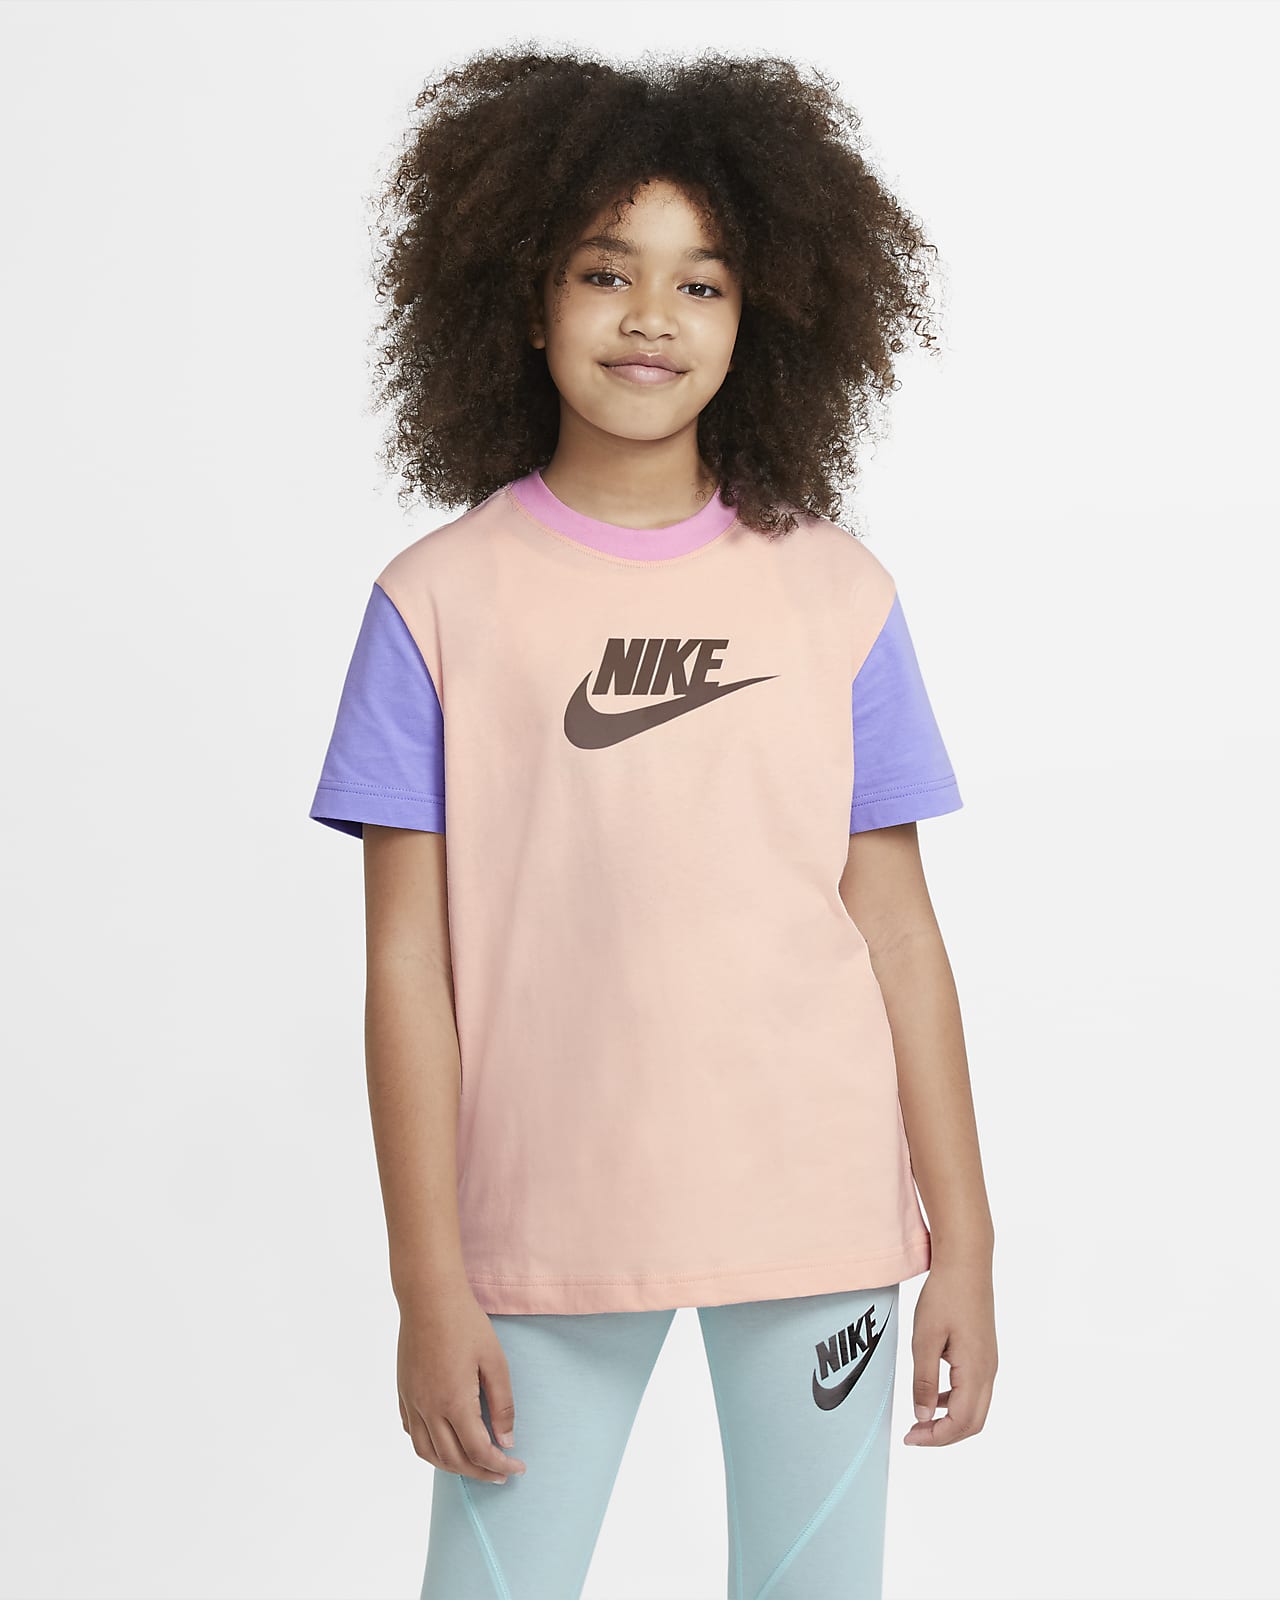 Nike Sportswear Kids' (Girls') Nike.com